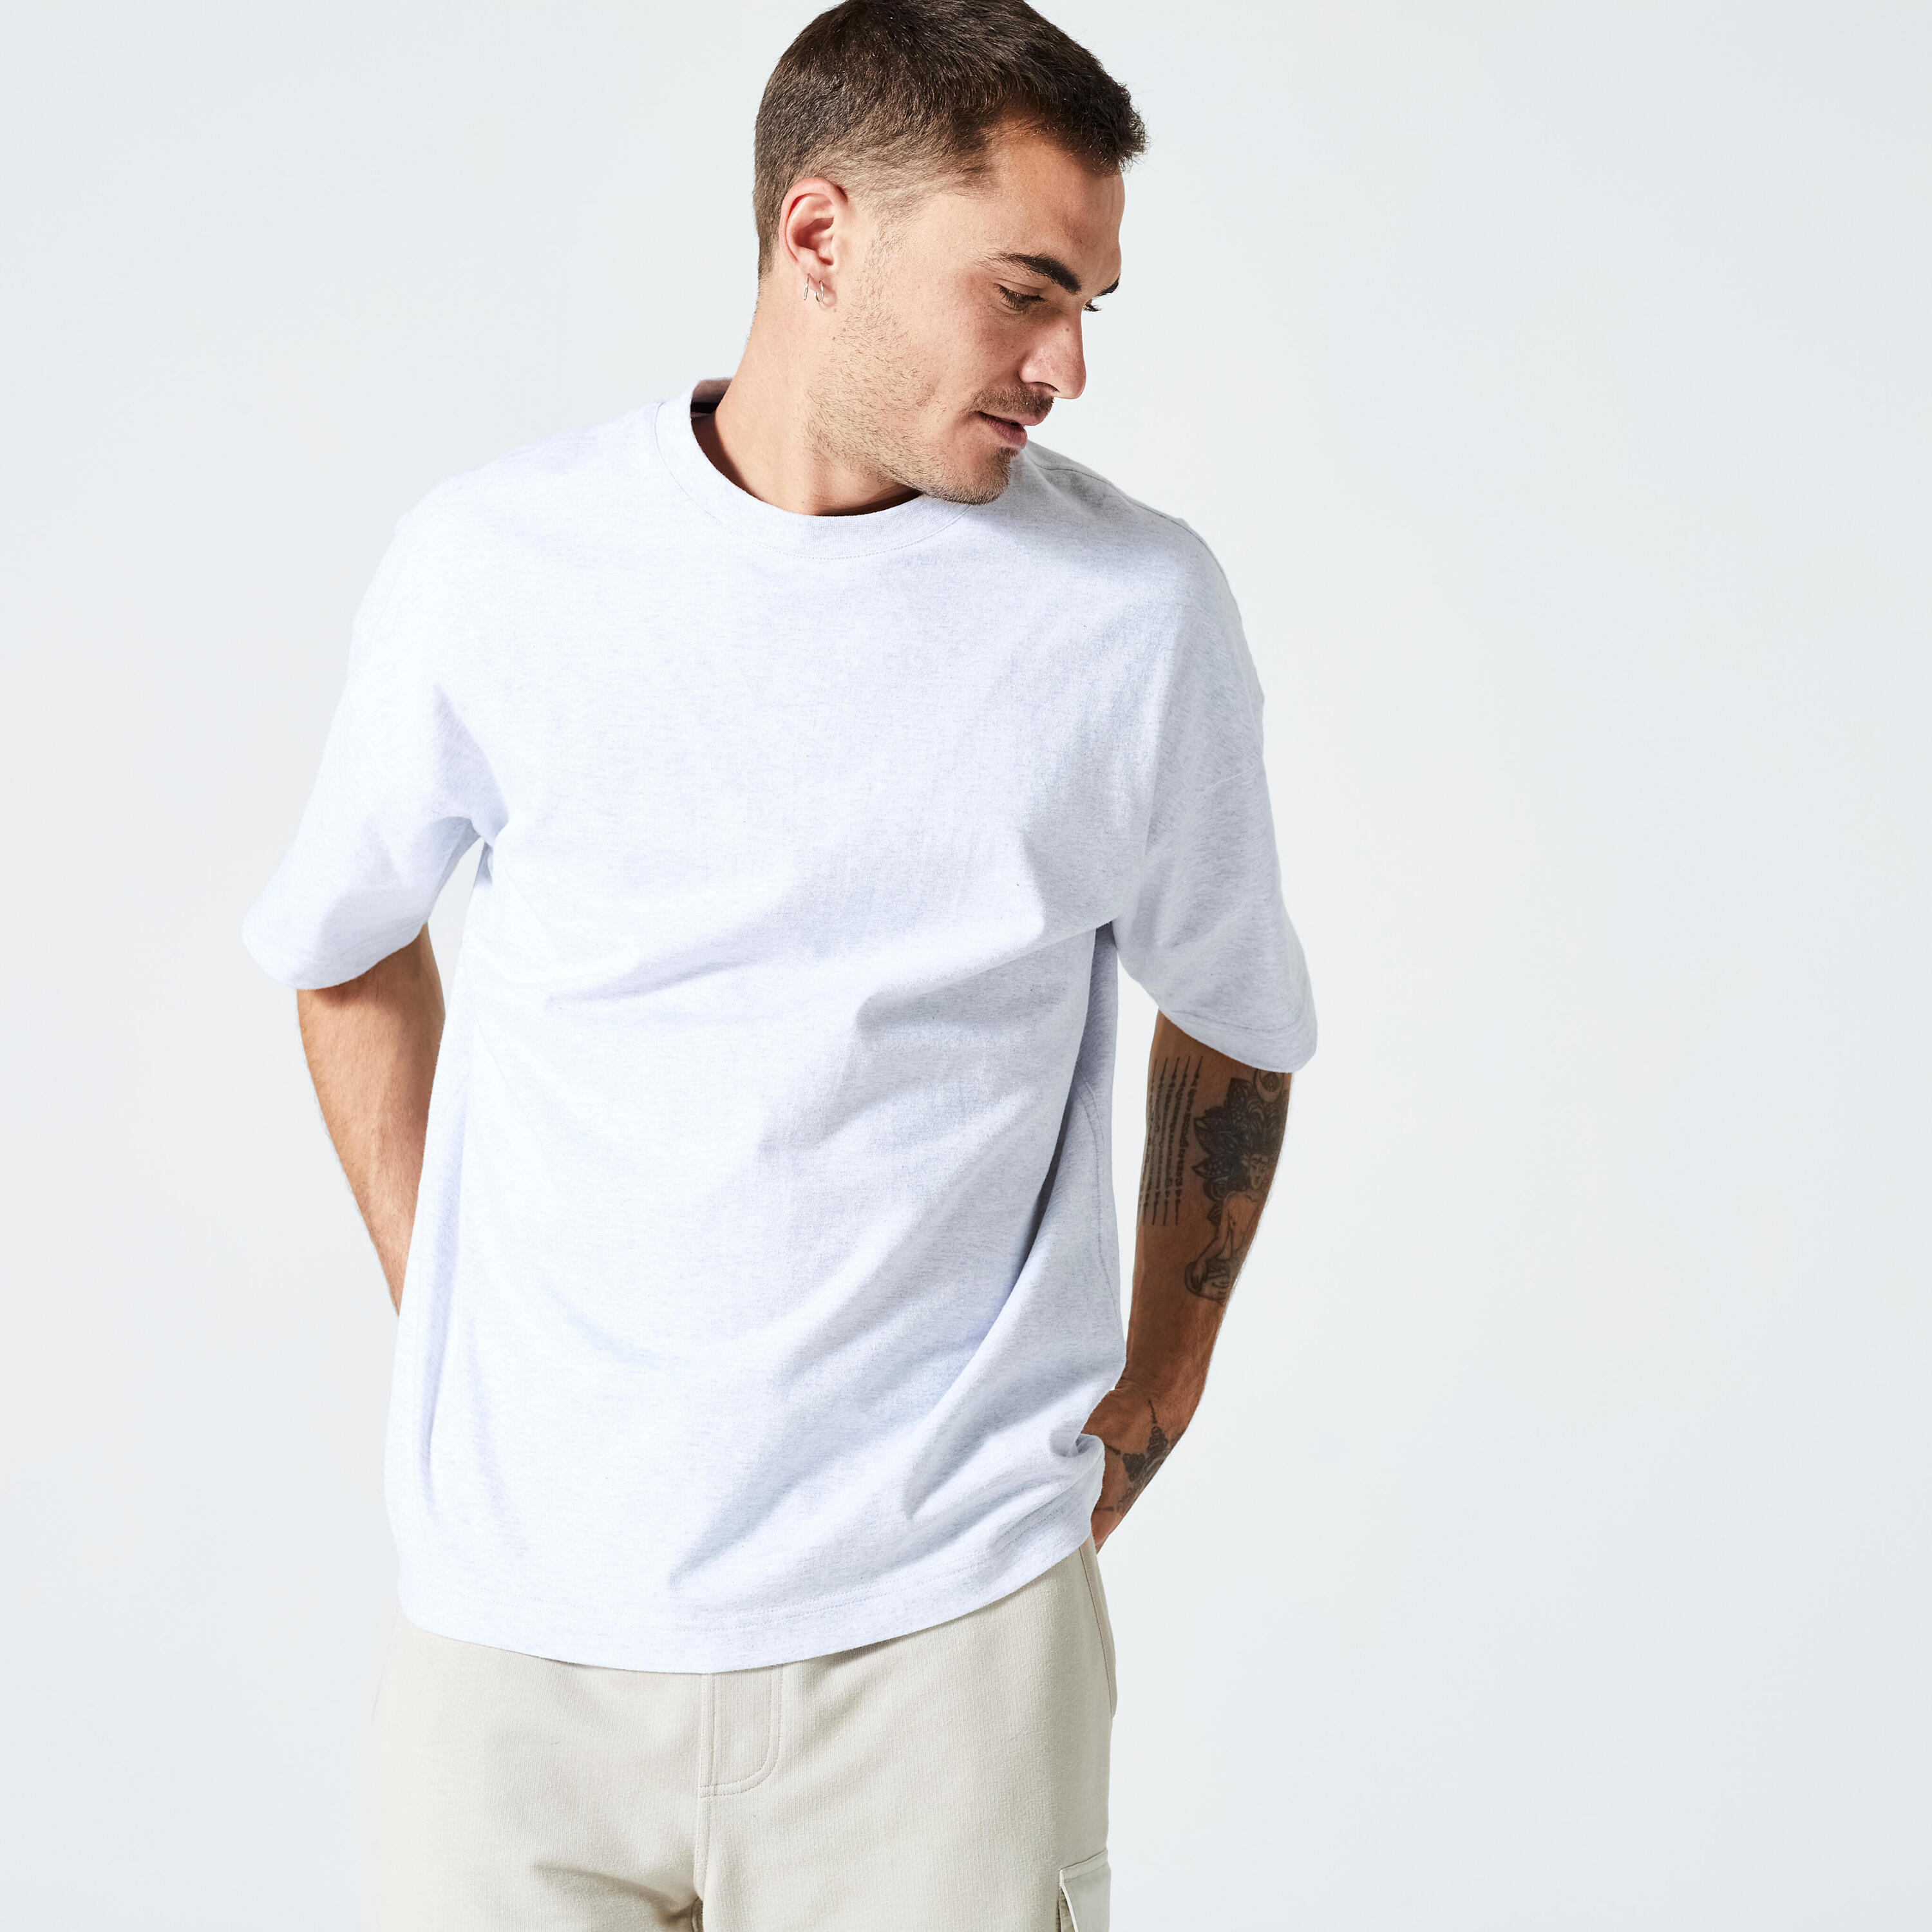 Men's Loose-Fit Fitness T-Shirt 520 - Pale Grey 1/5